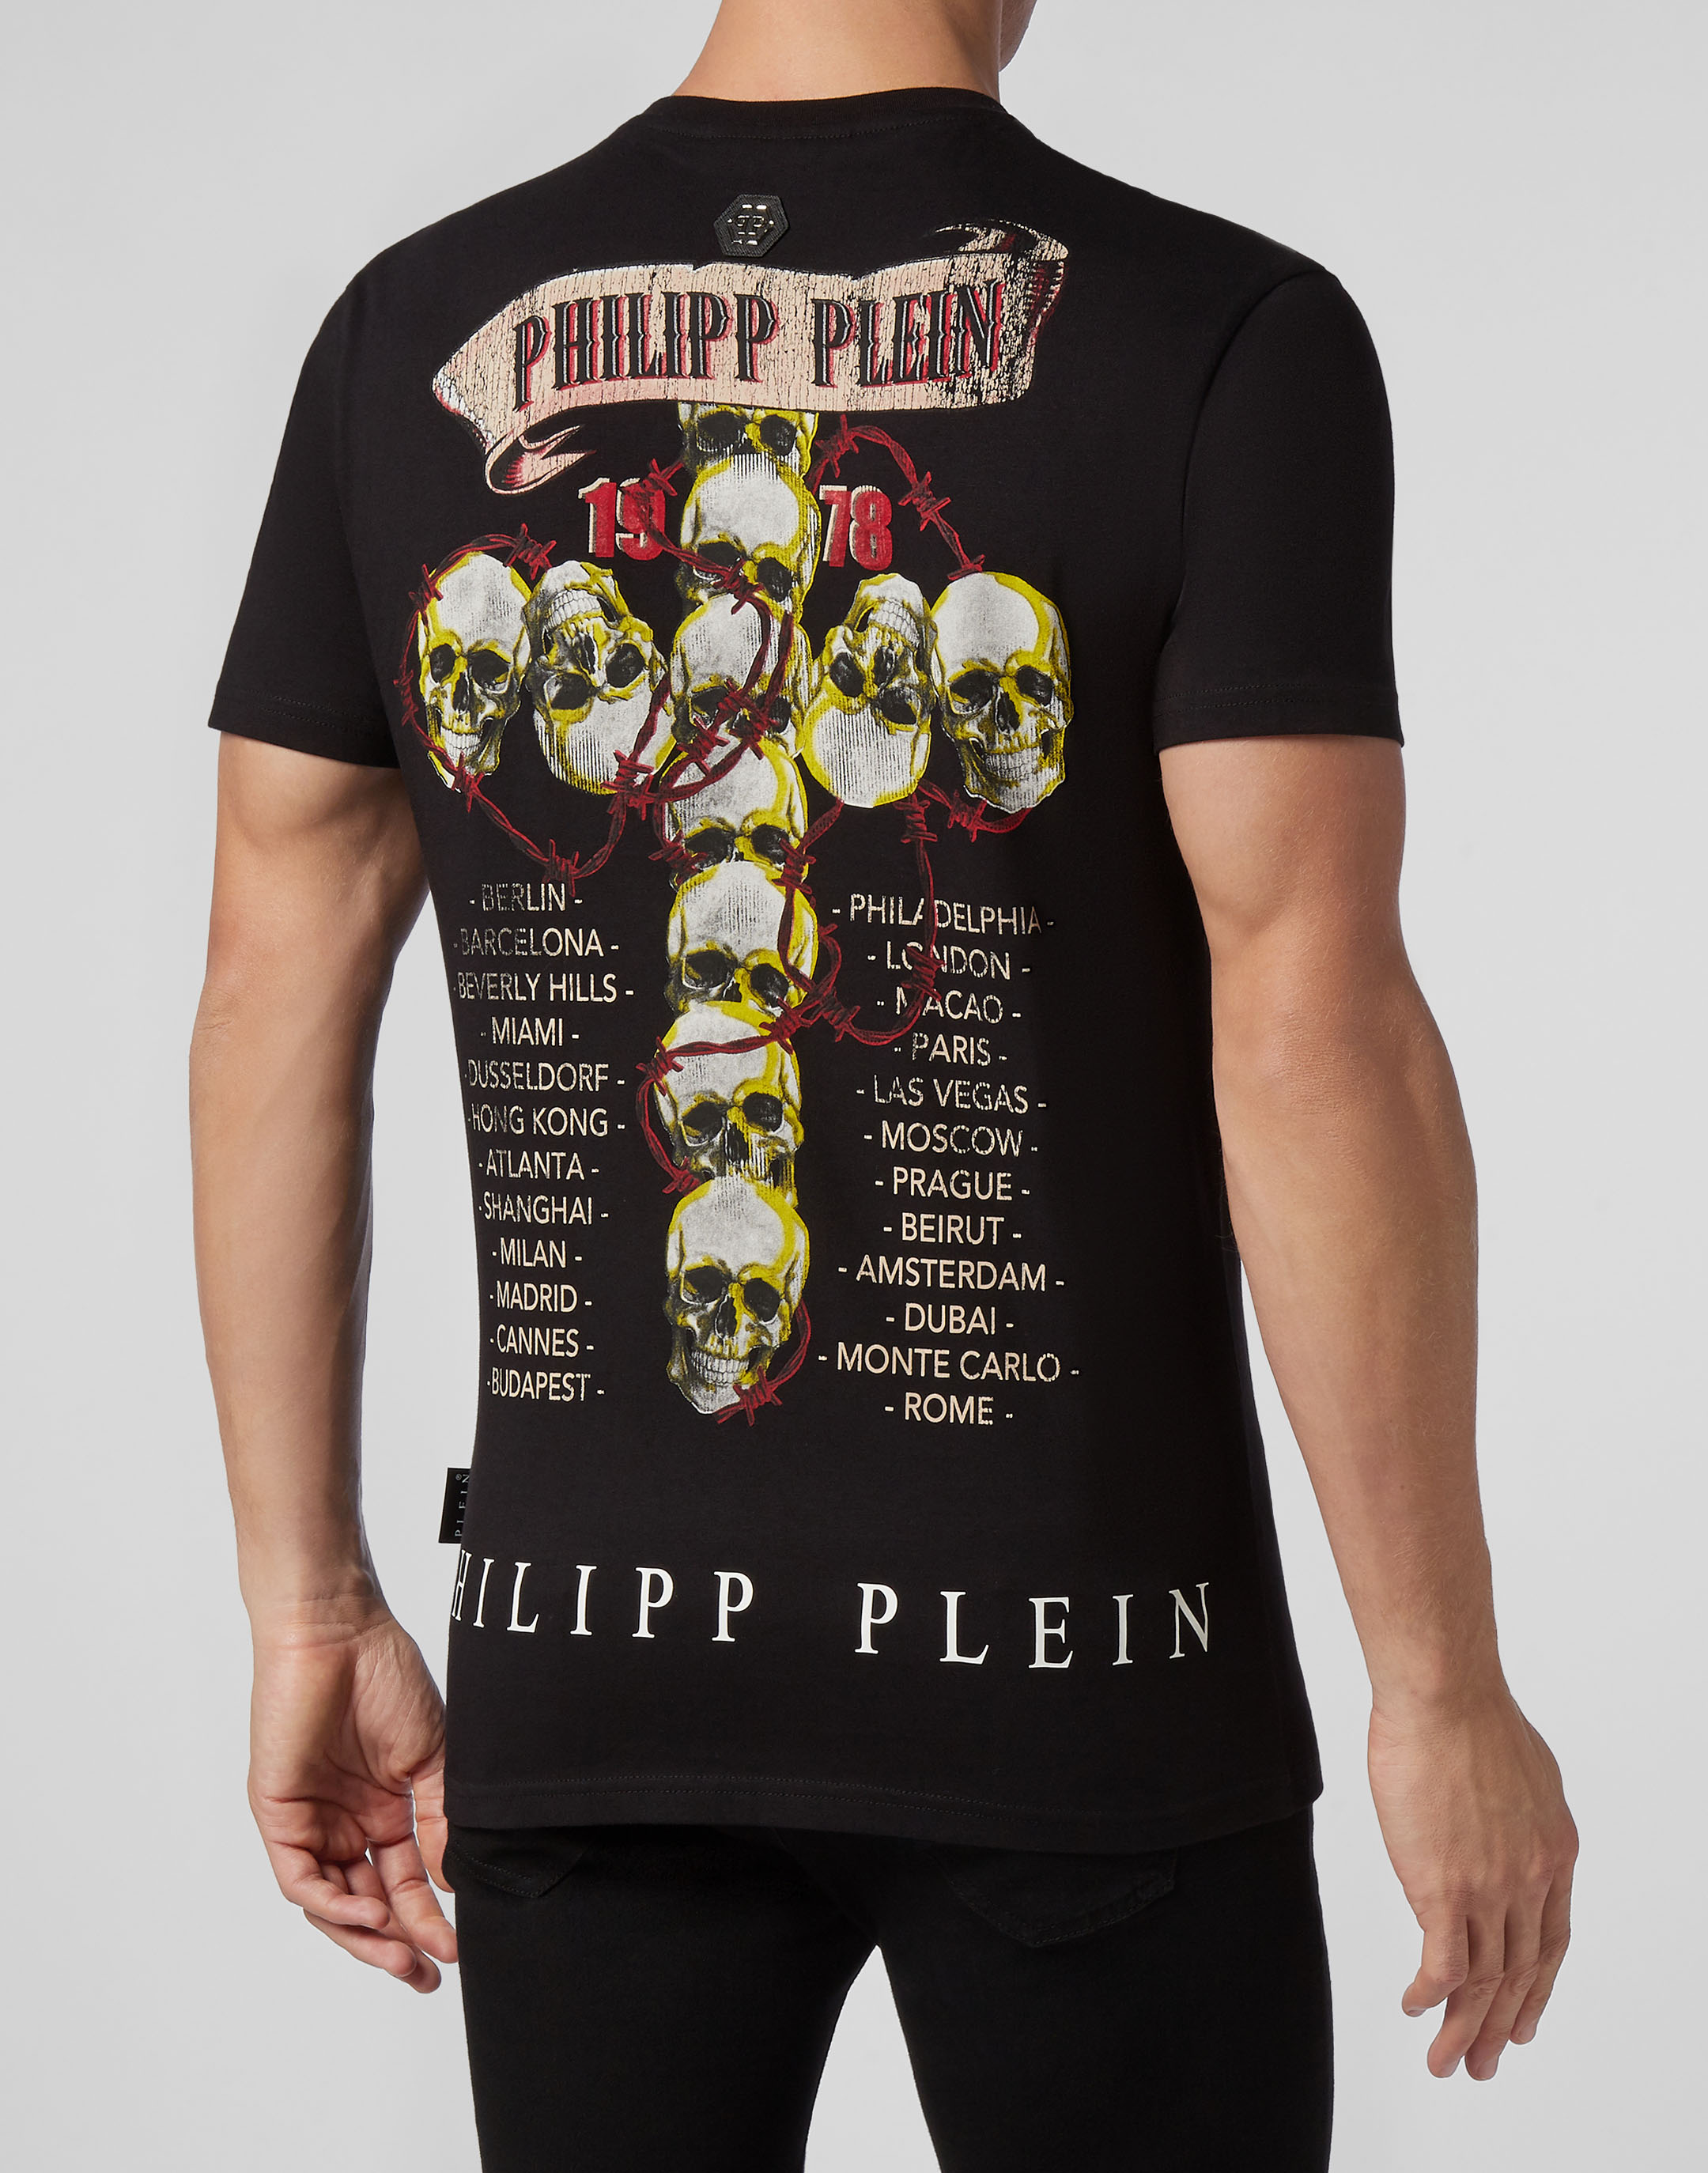 Philipp Plein Clothing Store In Amsterdam Netherlands Stock Photo